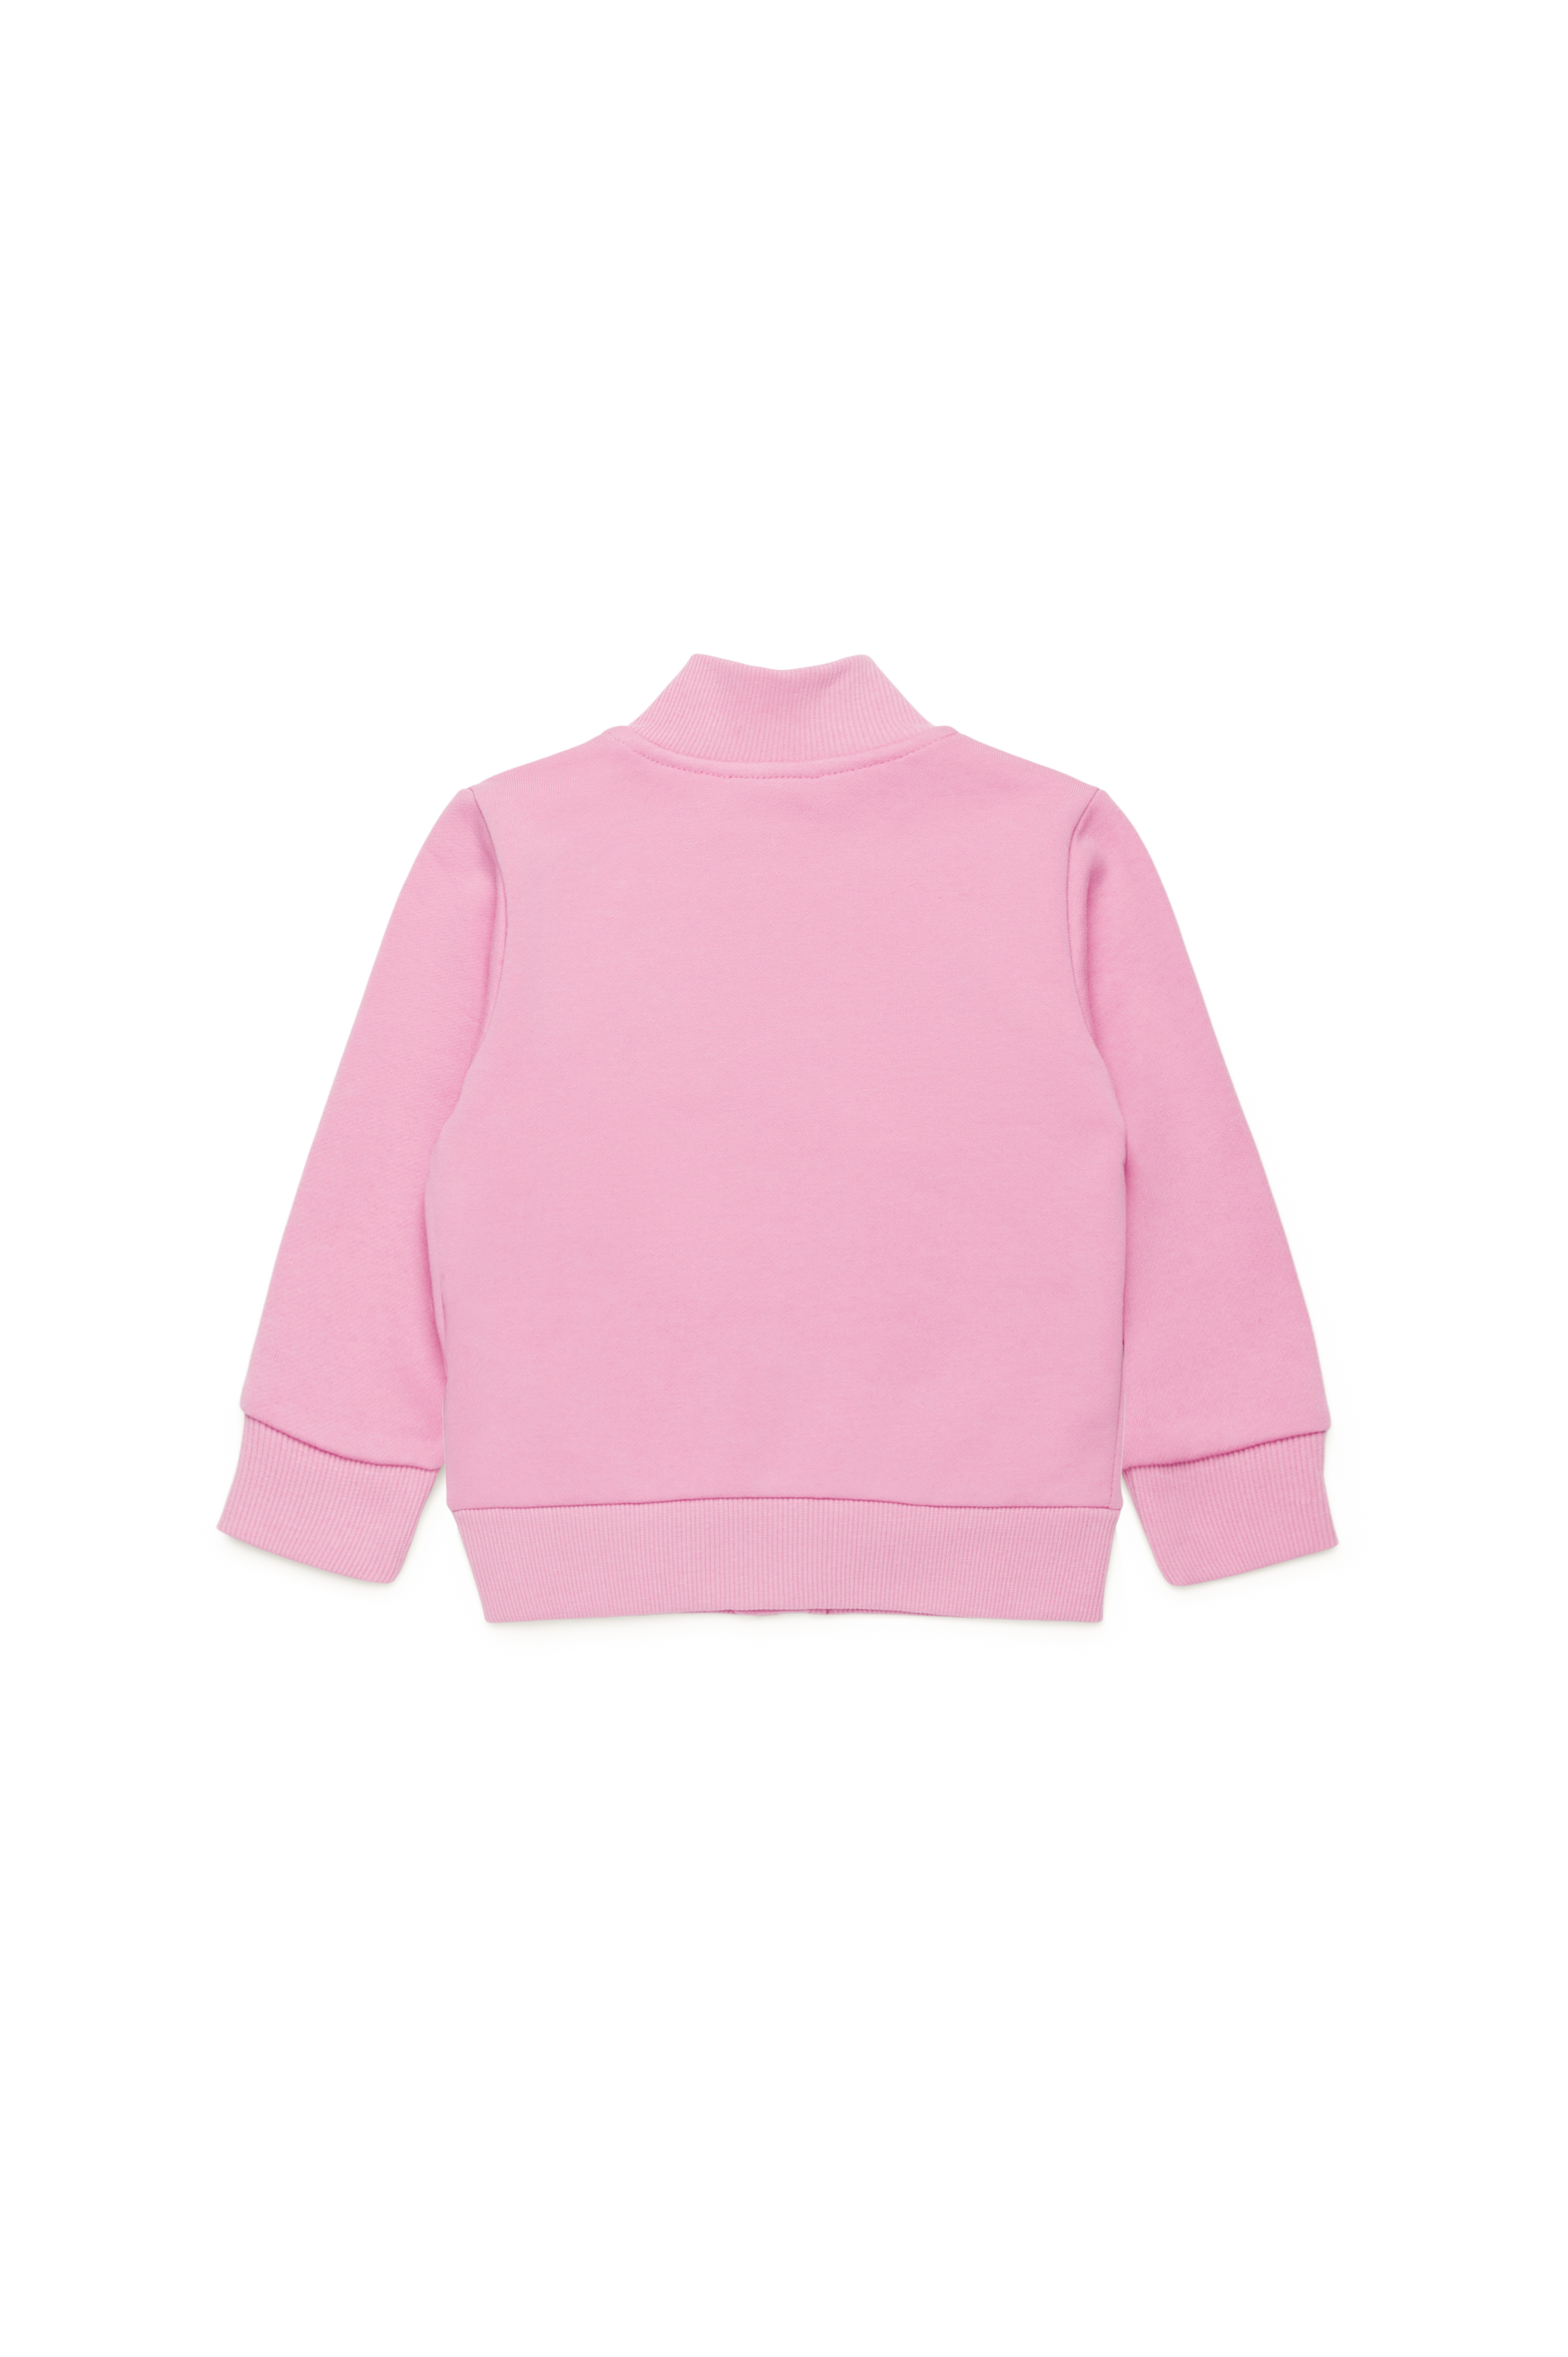 Diesel - SMARCOB, Unisex Zipped sweatshirt with Oval D print in Pink - Image 2